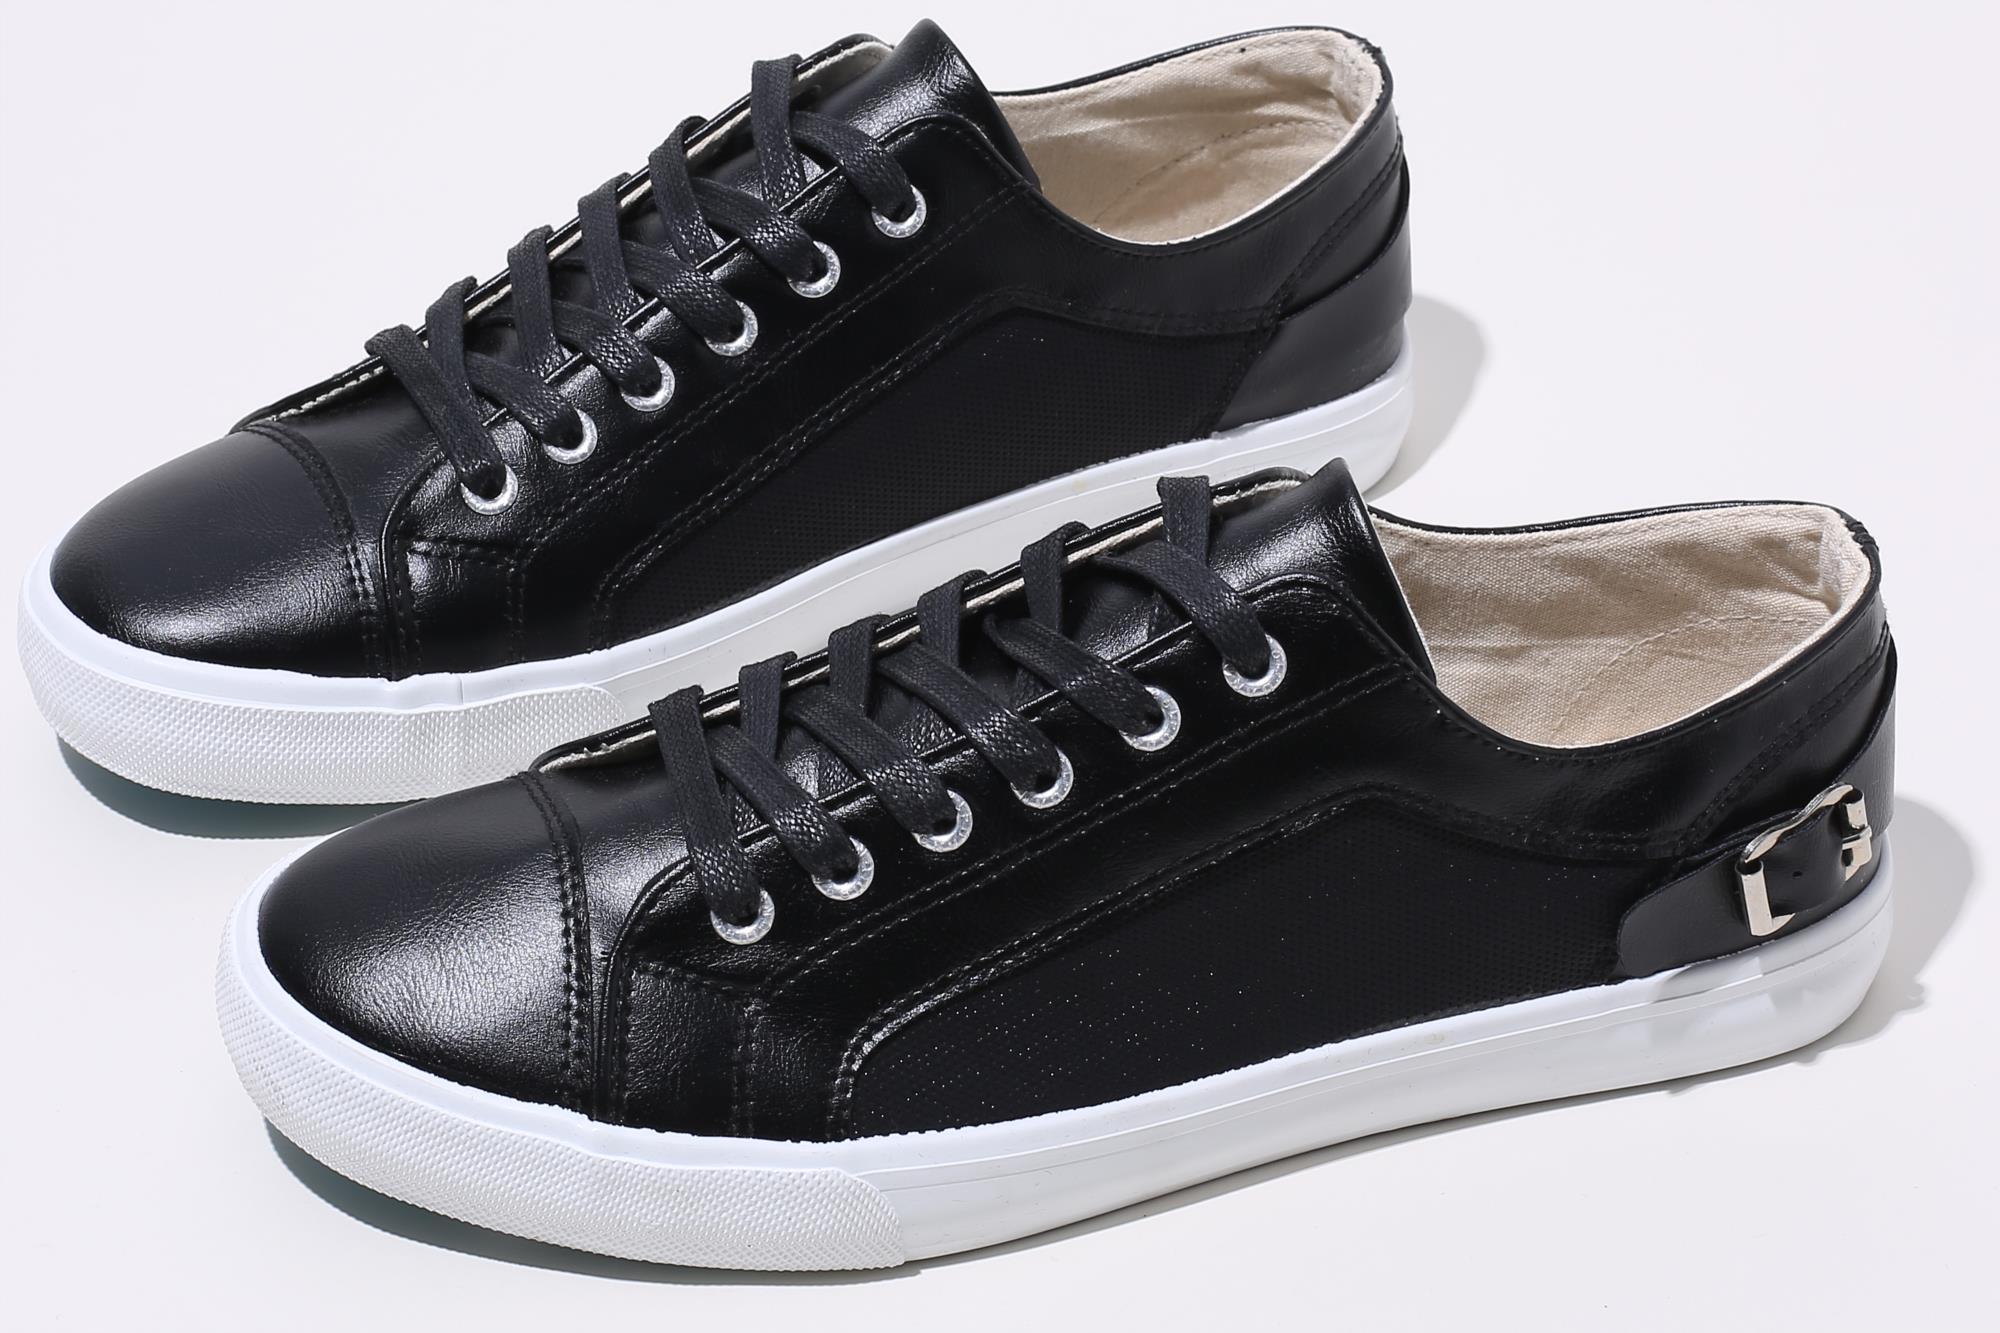 New arrival latest design fashion comfy black leather shoes men